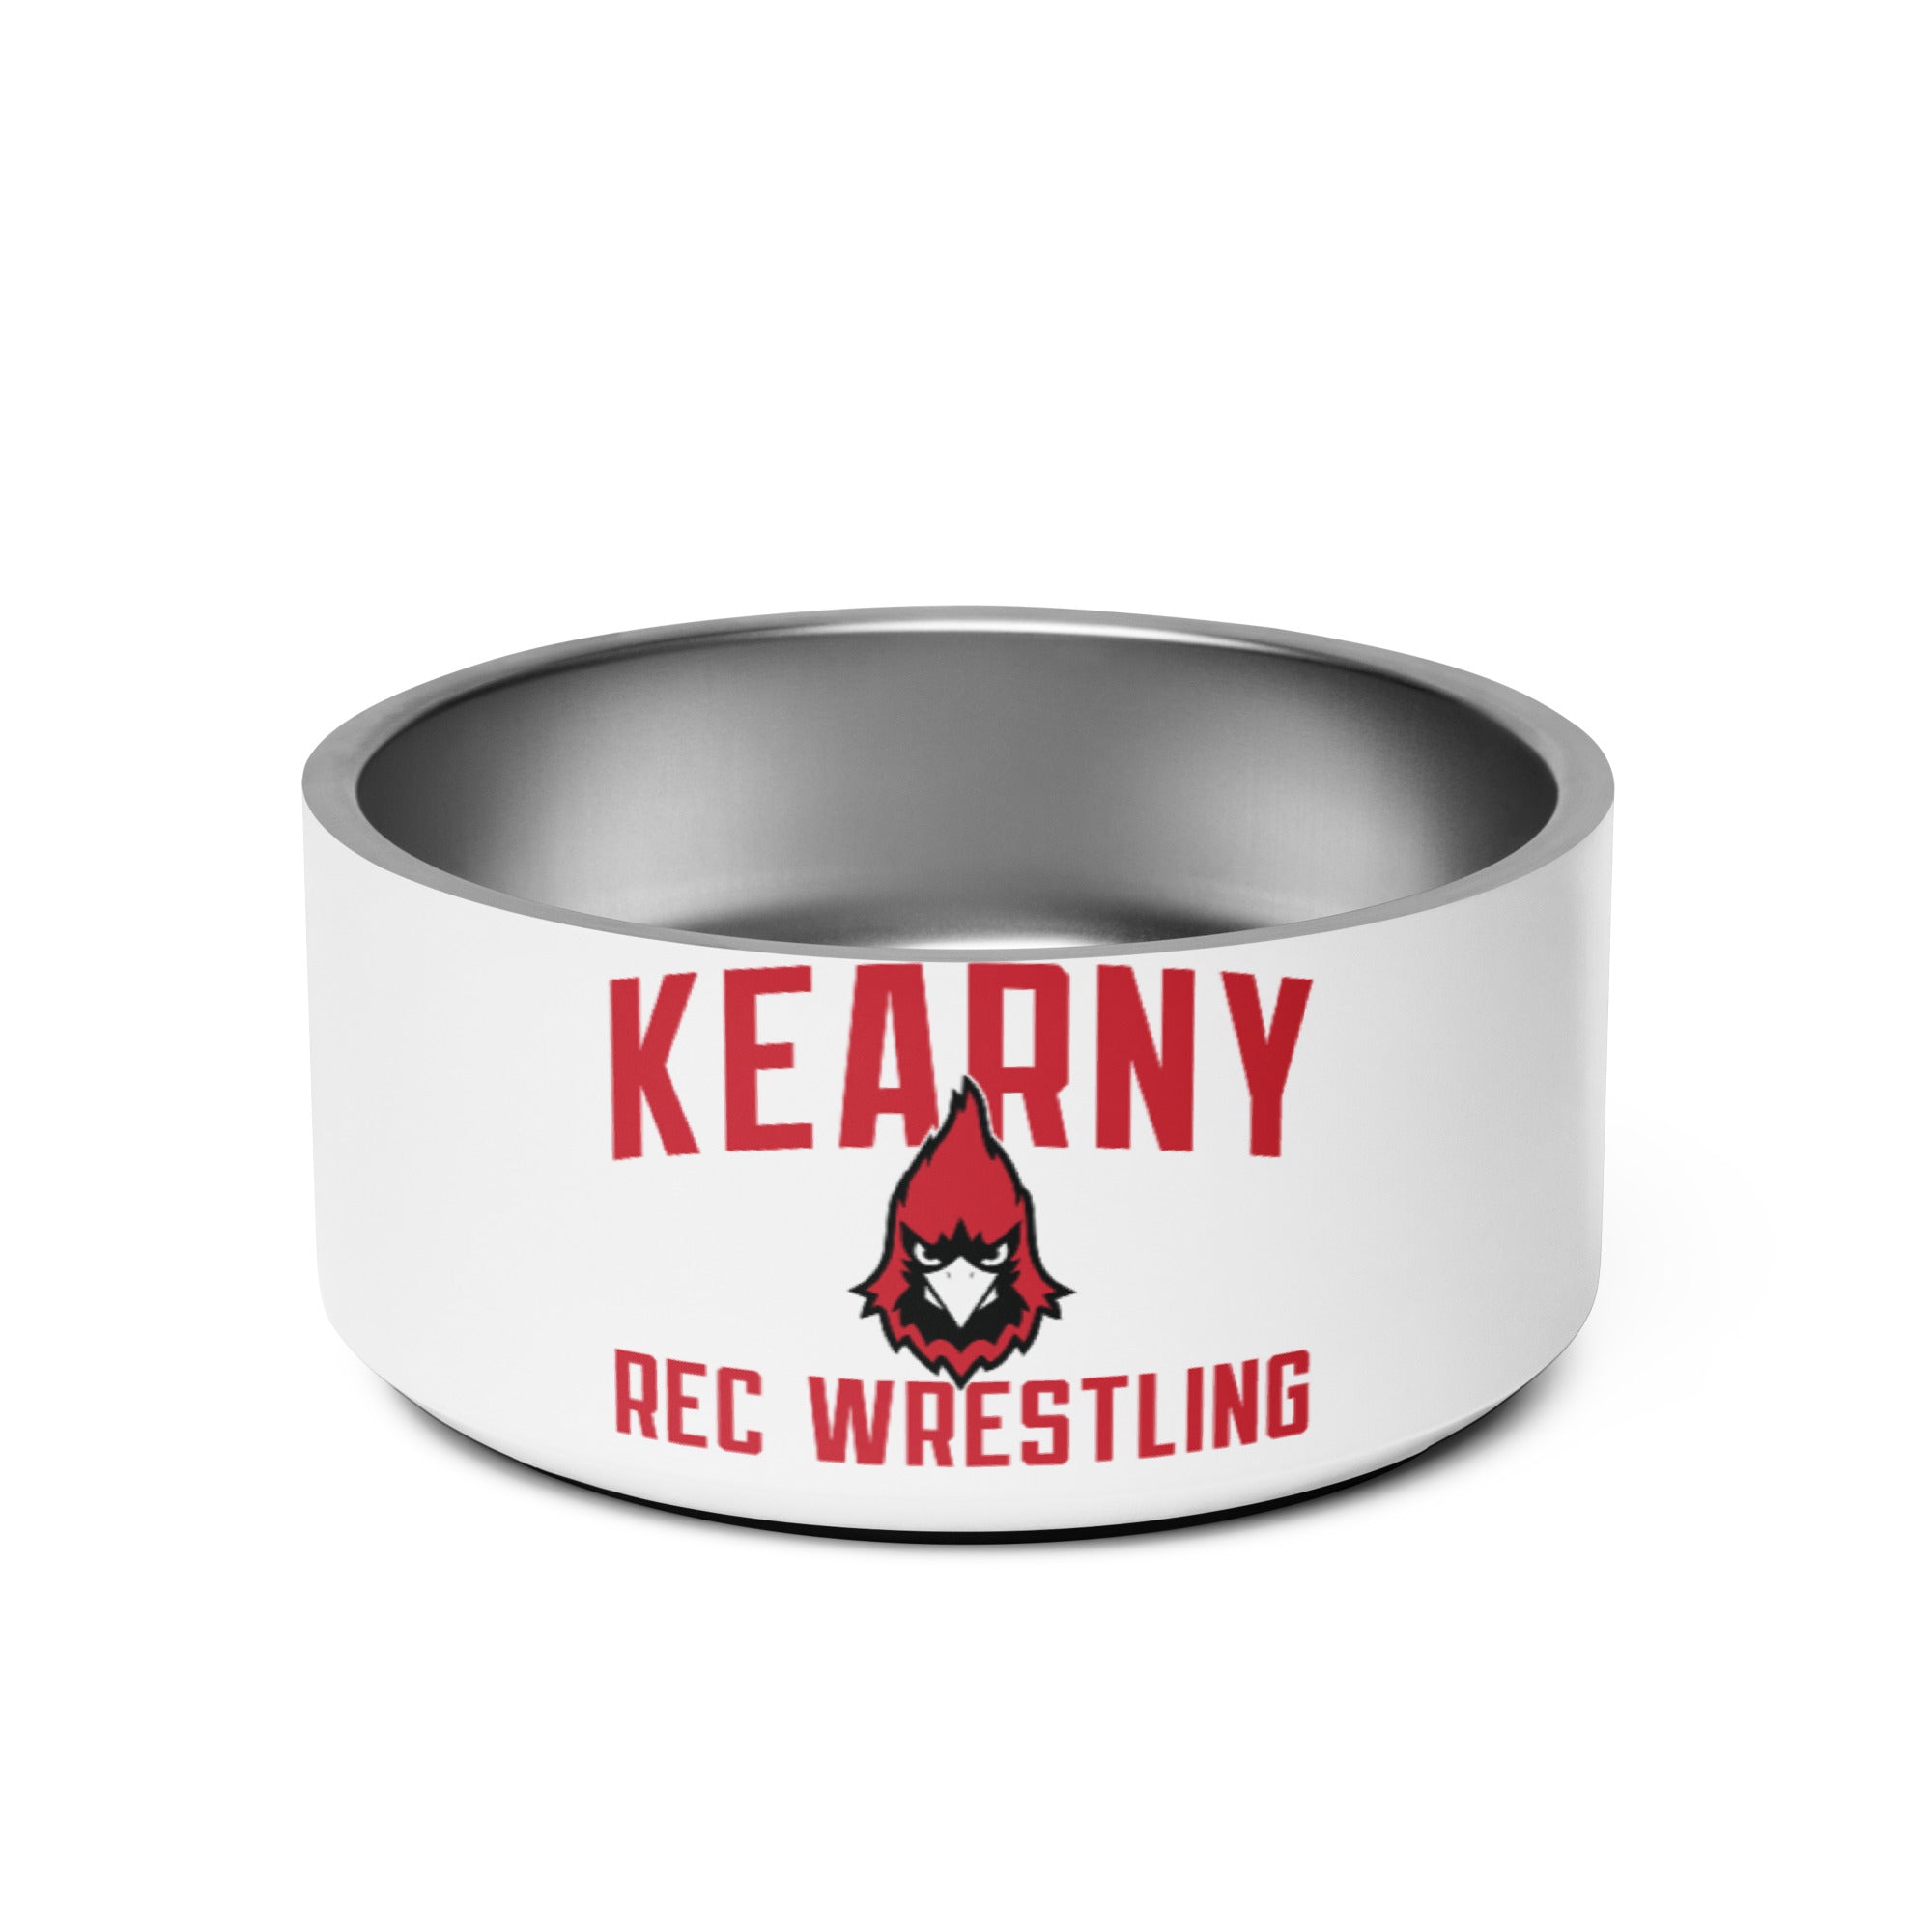 Kearny Rec Wrestling All Over Print Pet bowl